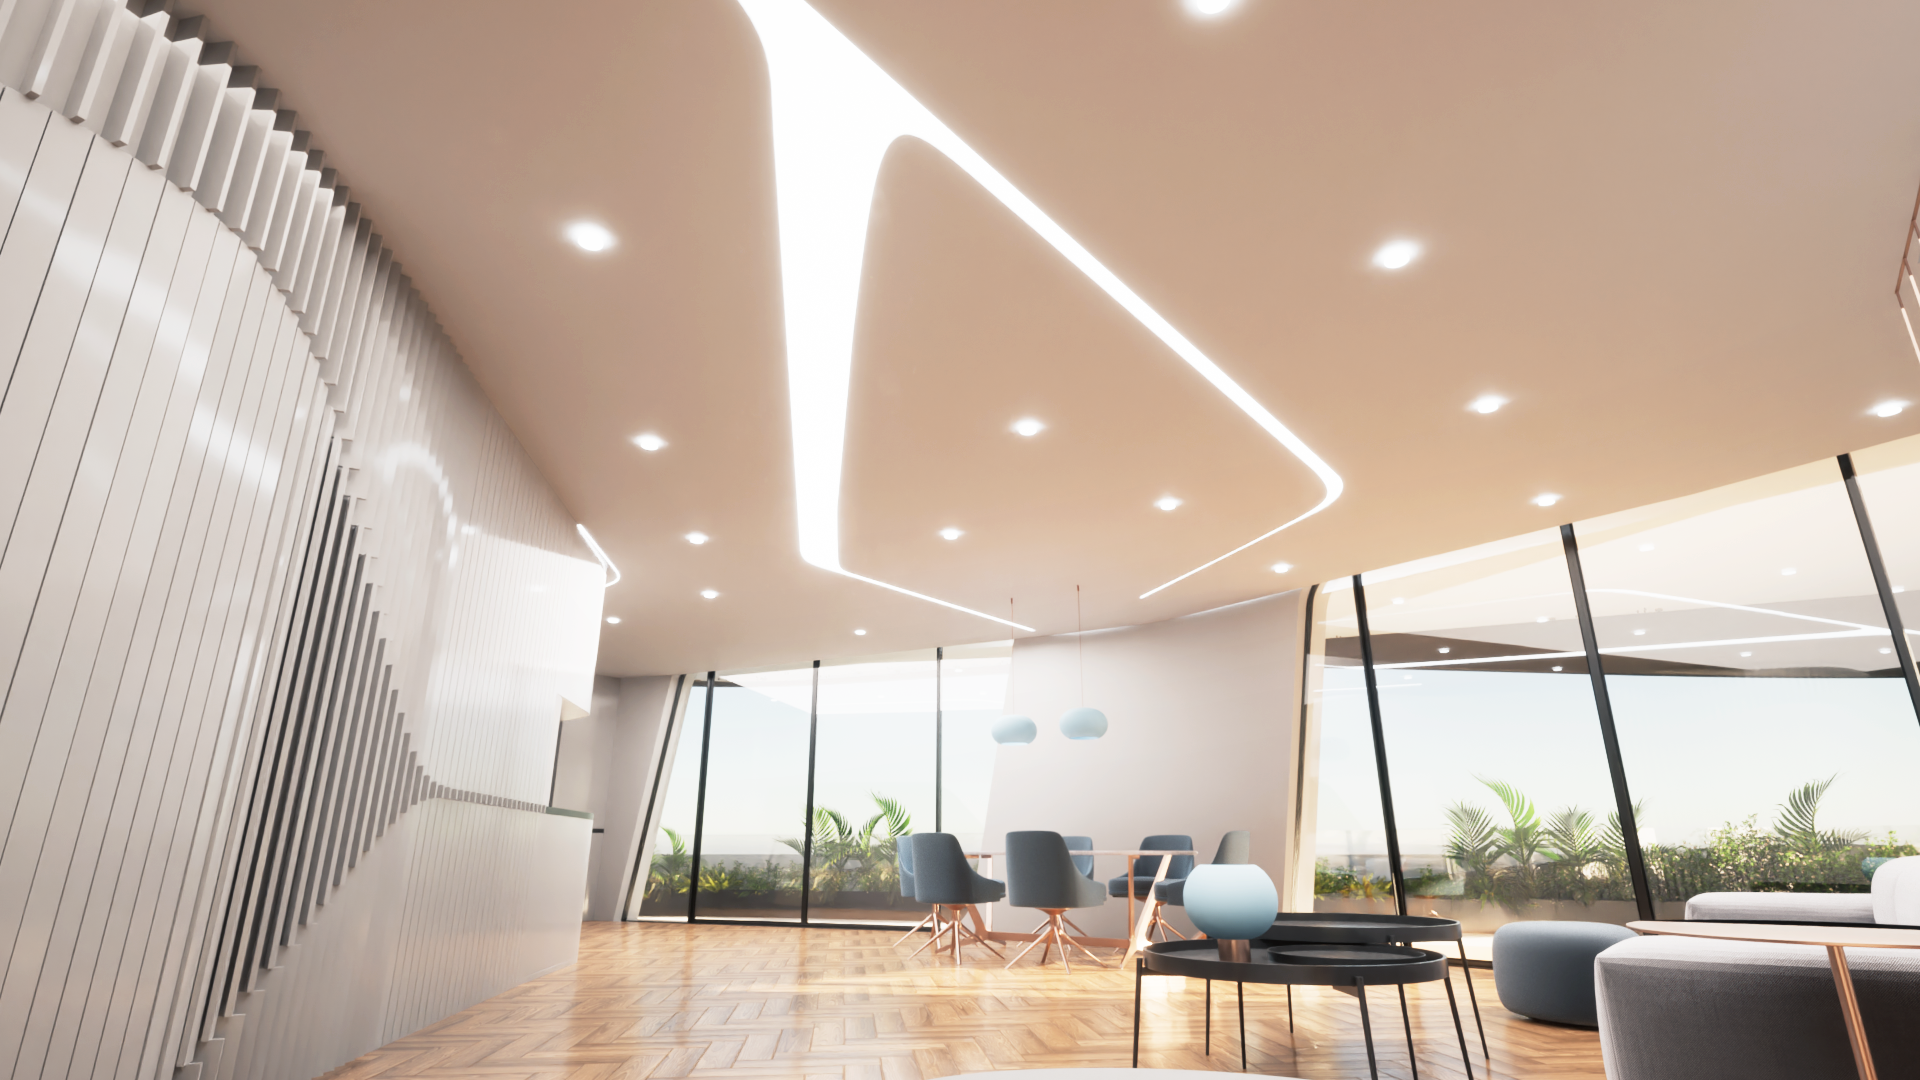 Archisearch ArchitectScripta designed the new OnyxFLY luxury apartment building.